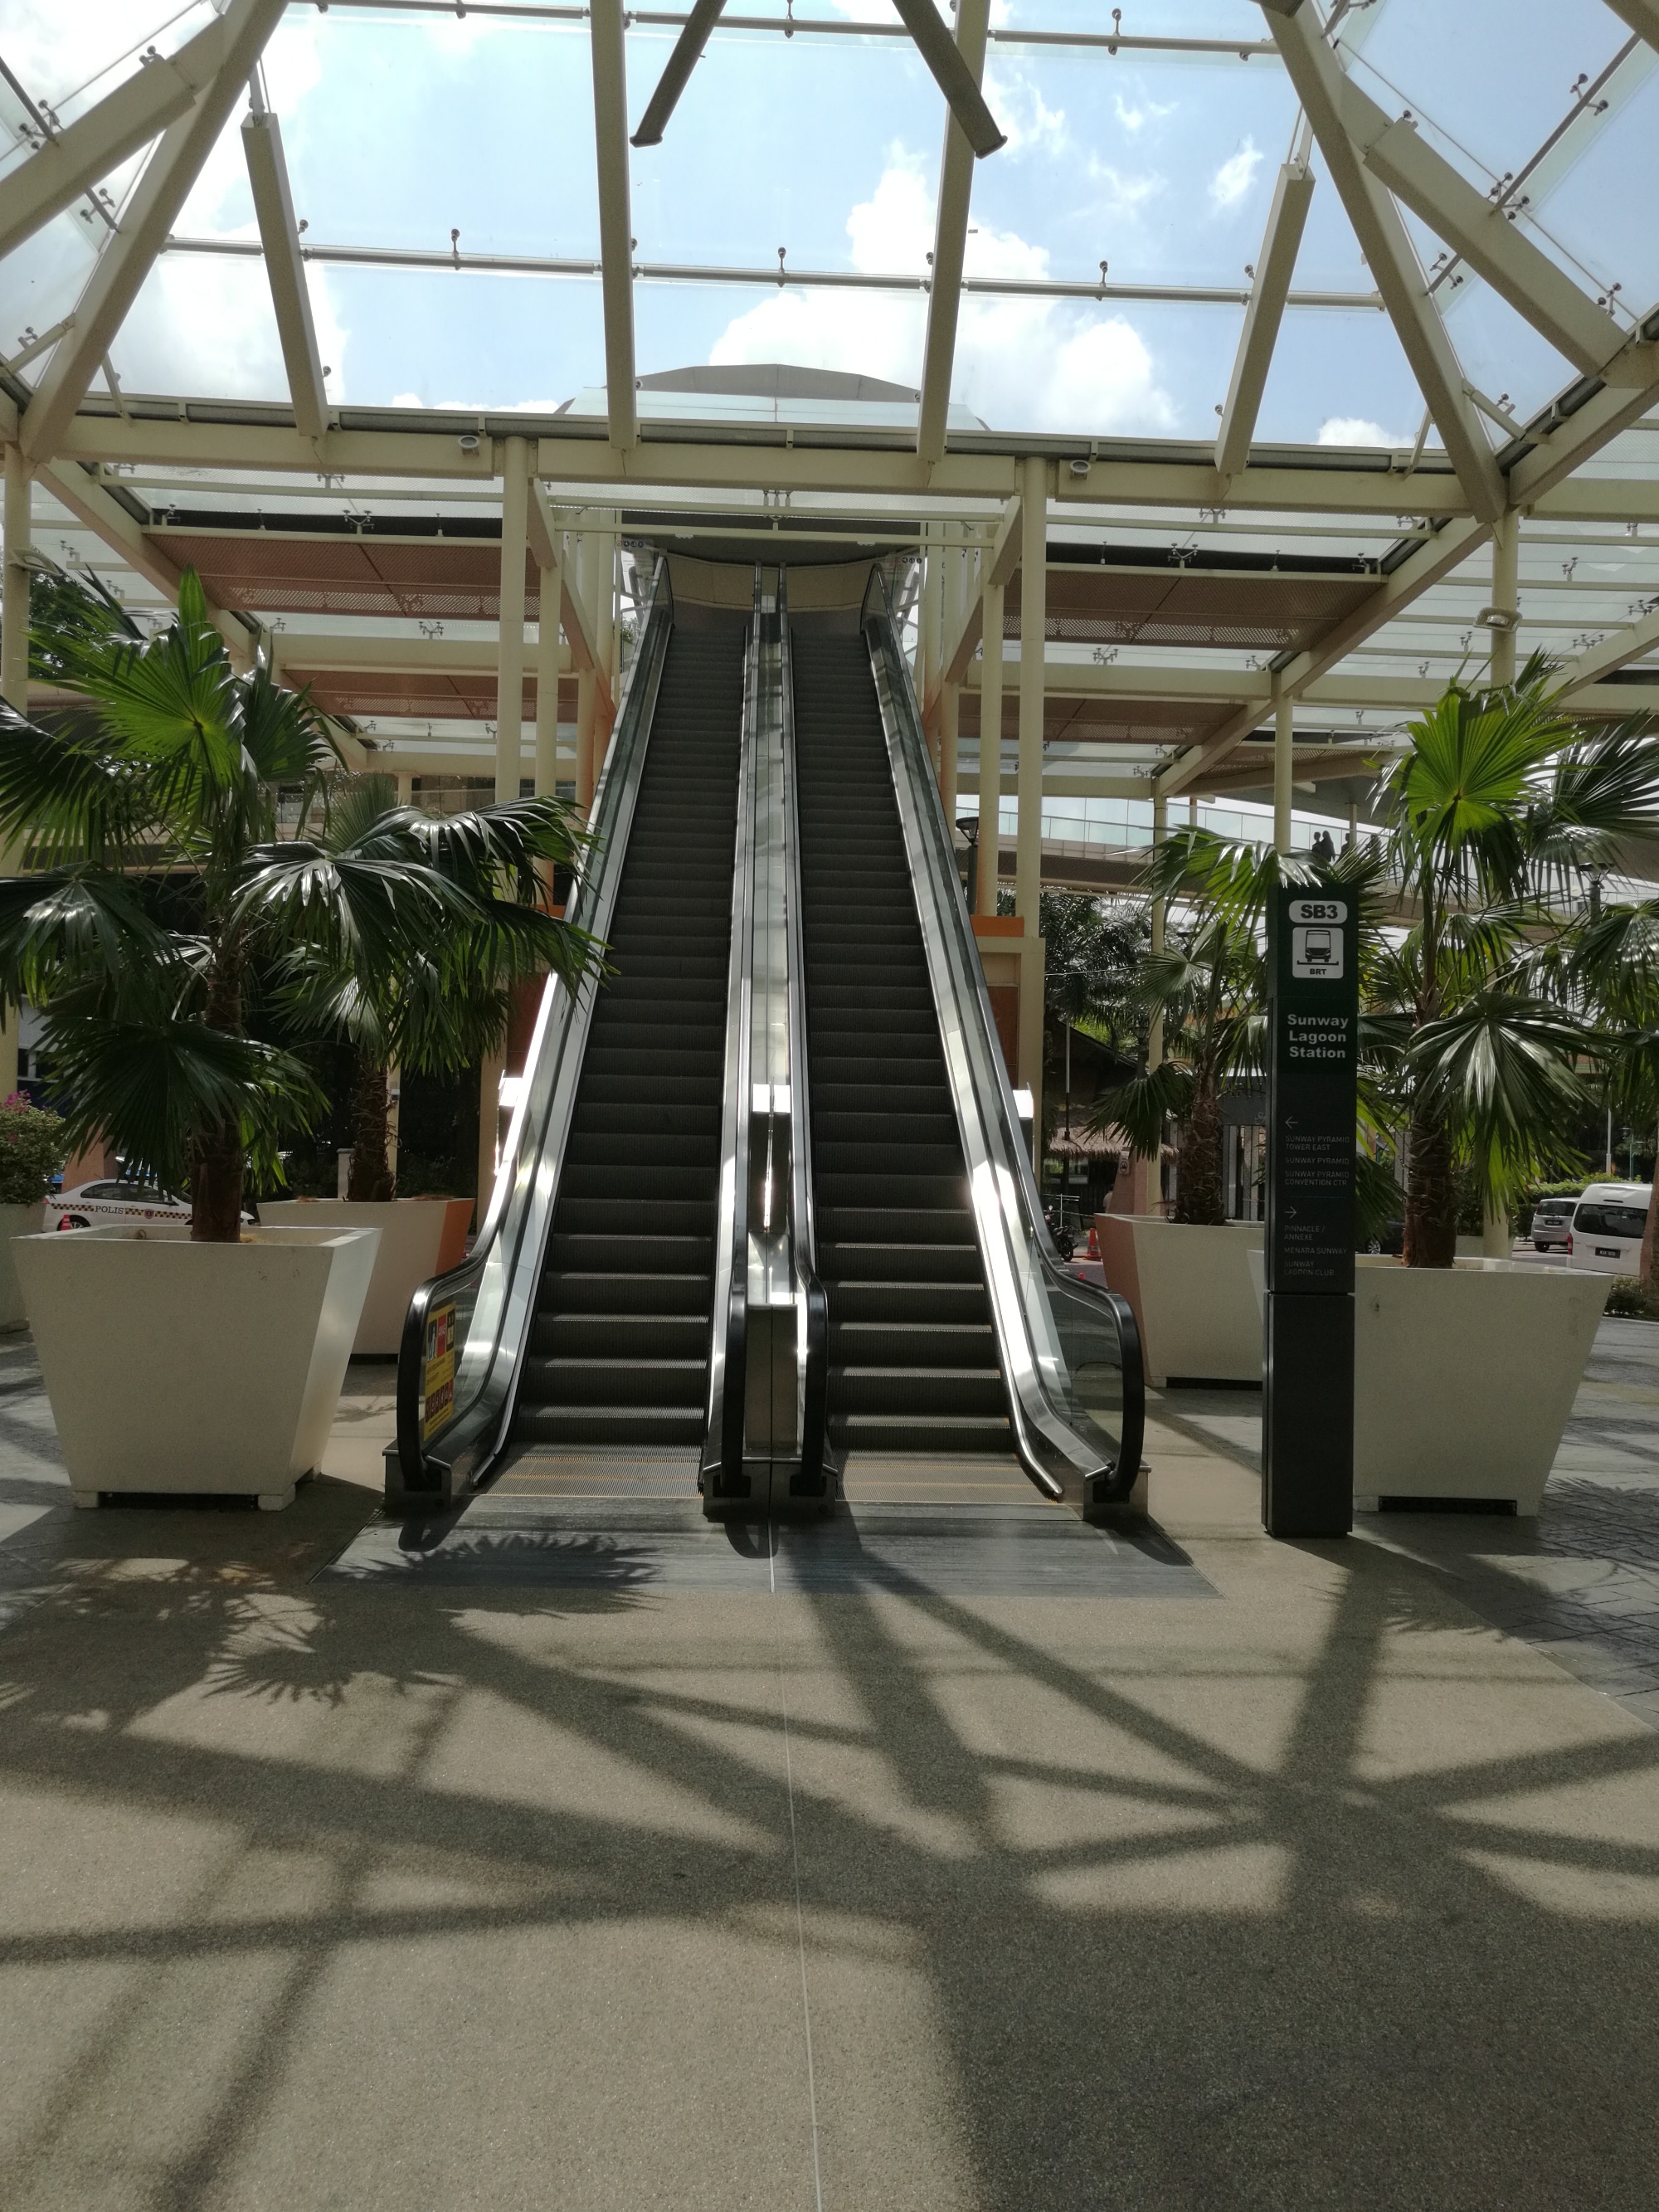 Escalator for Public Transportation